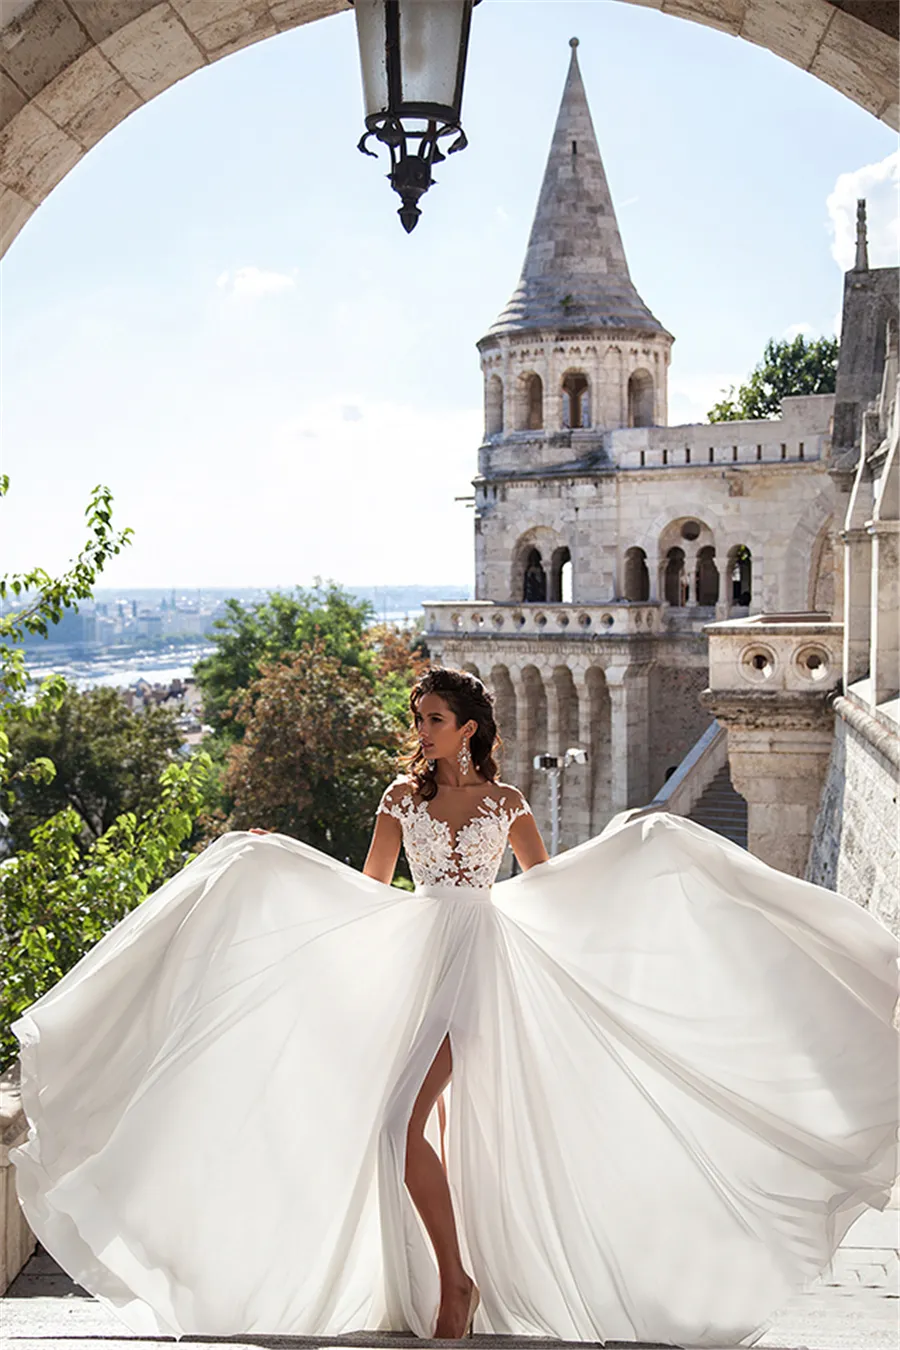 See Through Applique White Lace Bodice Short Sleeves A-line Wedding Dress Sexy Front Slit Bridal Dress vestido de casamento